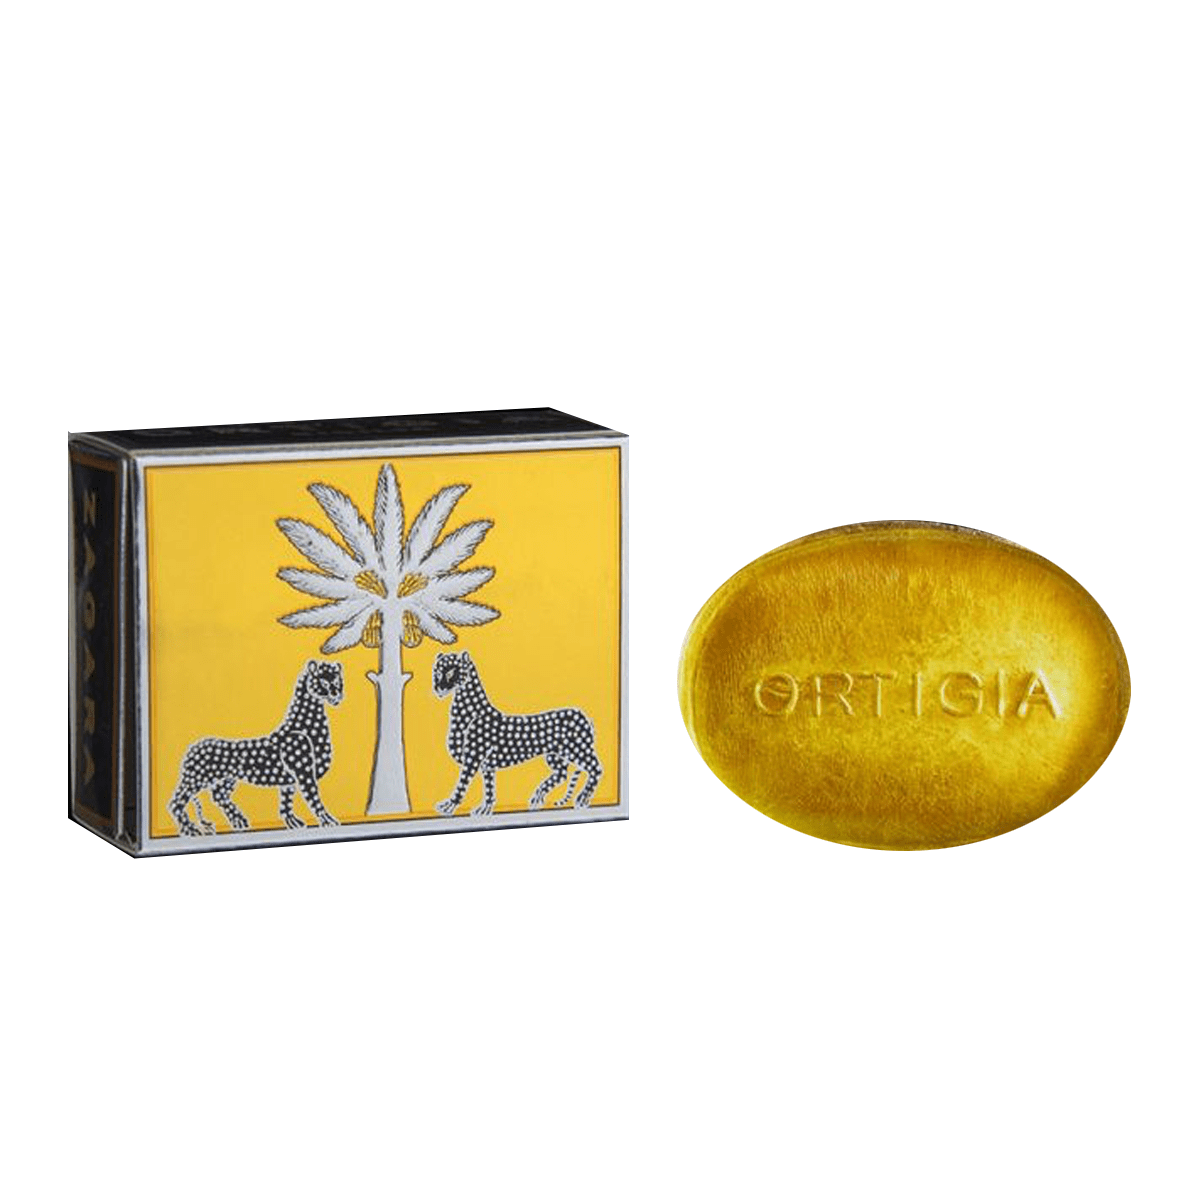 Ortiga single soap and box